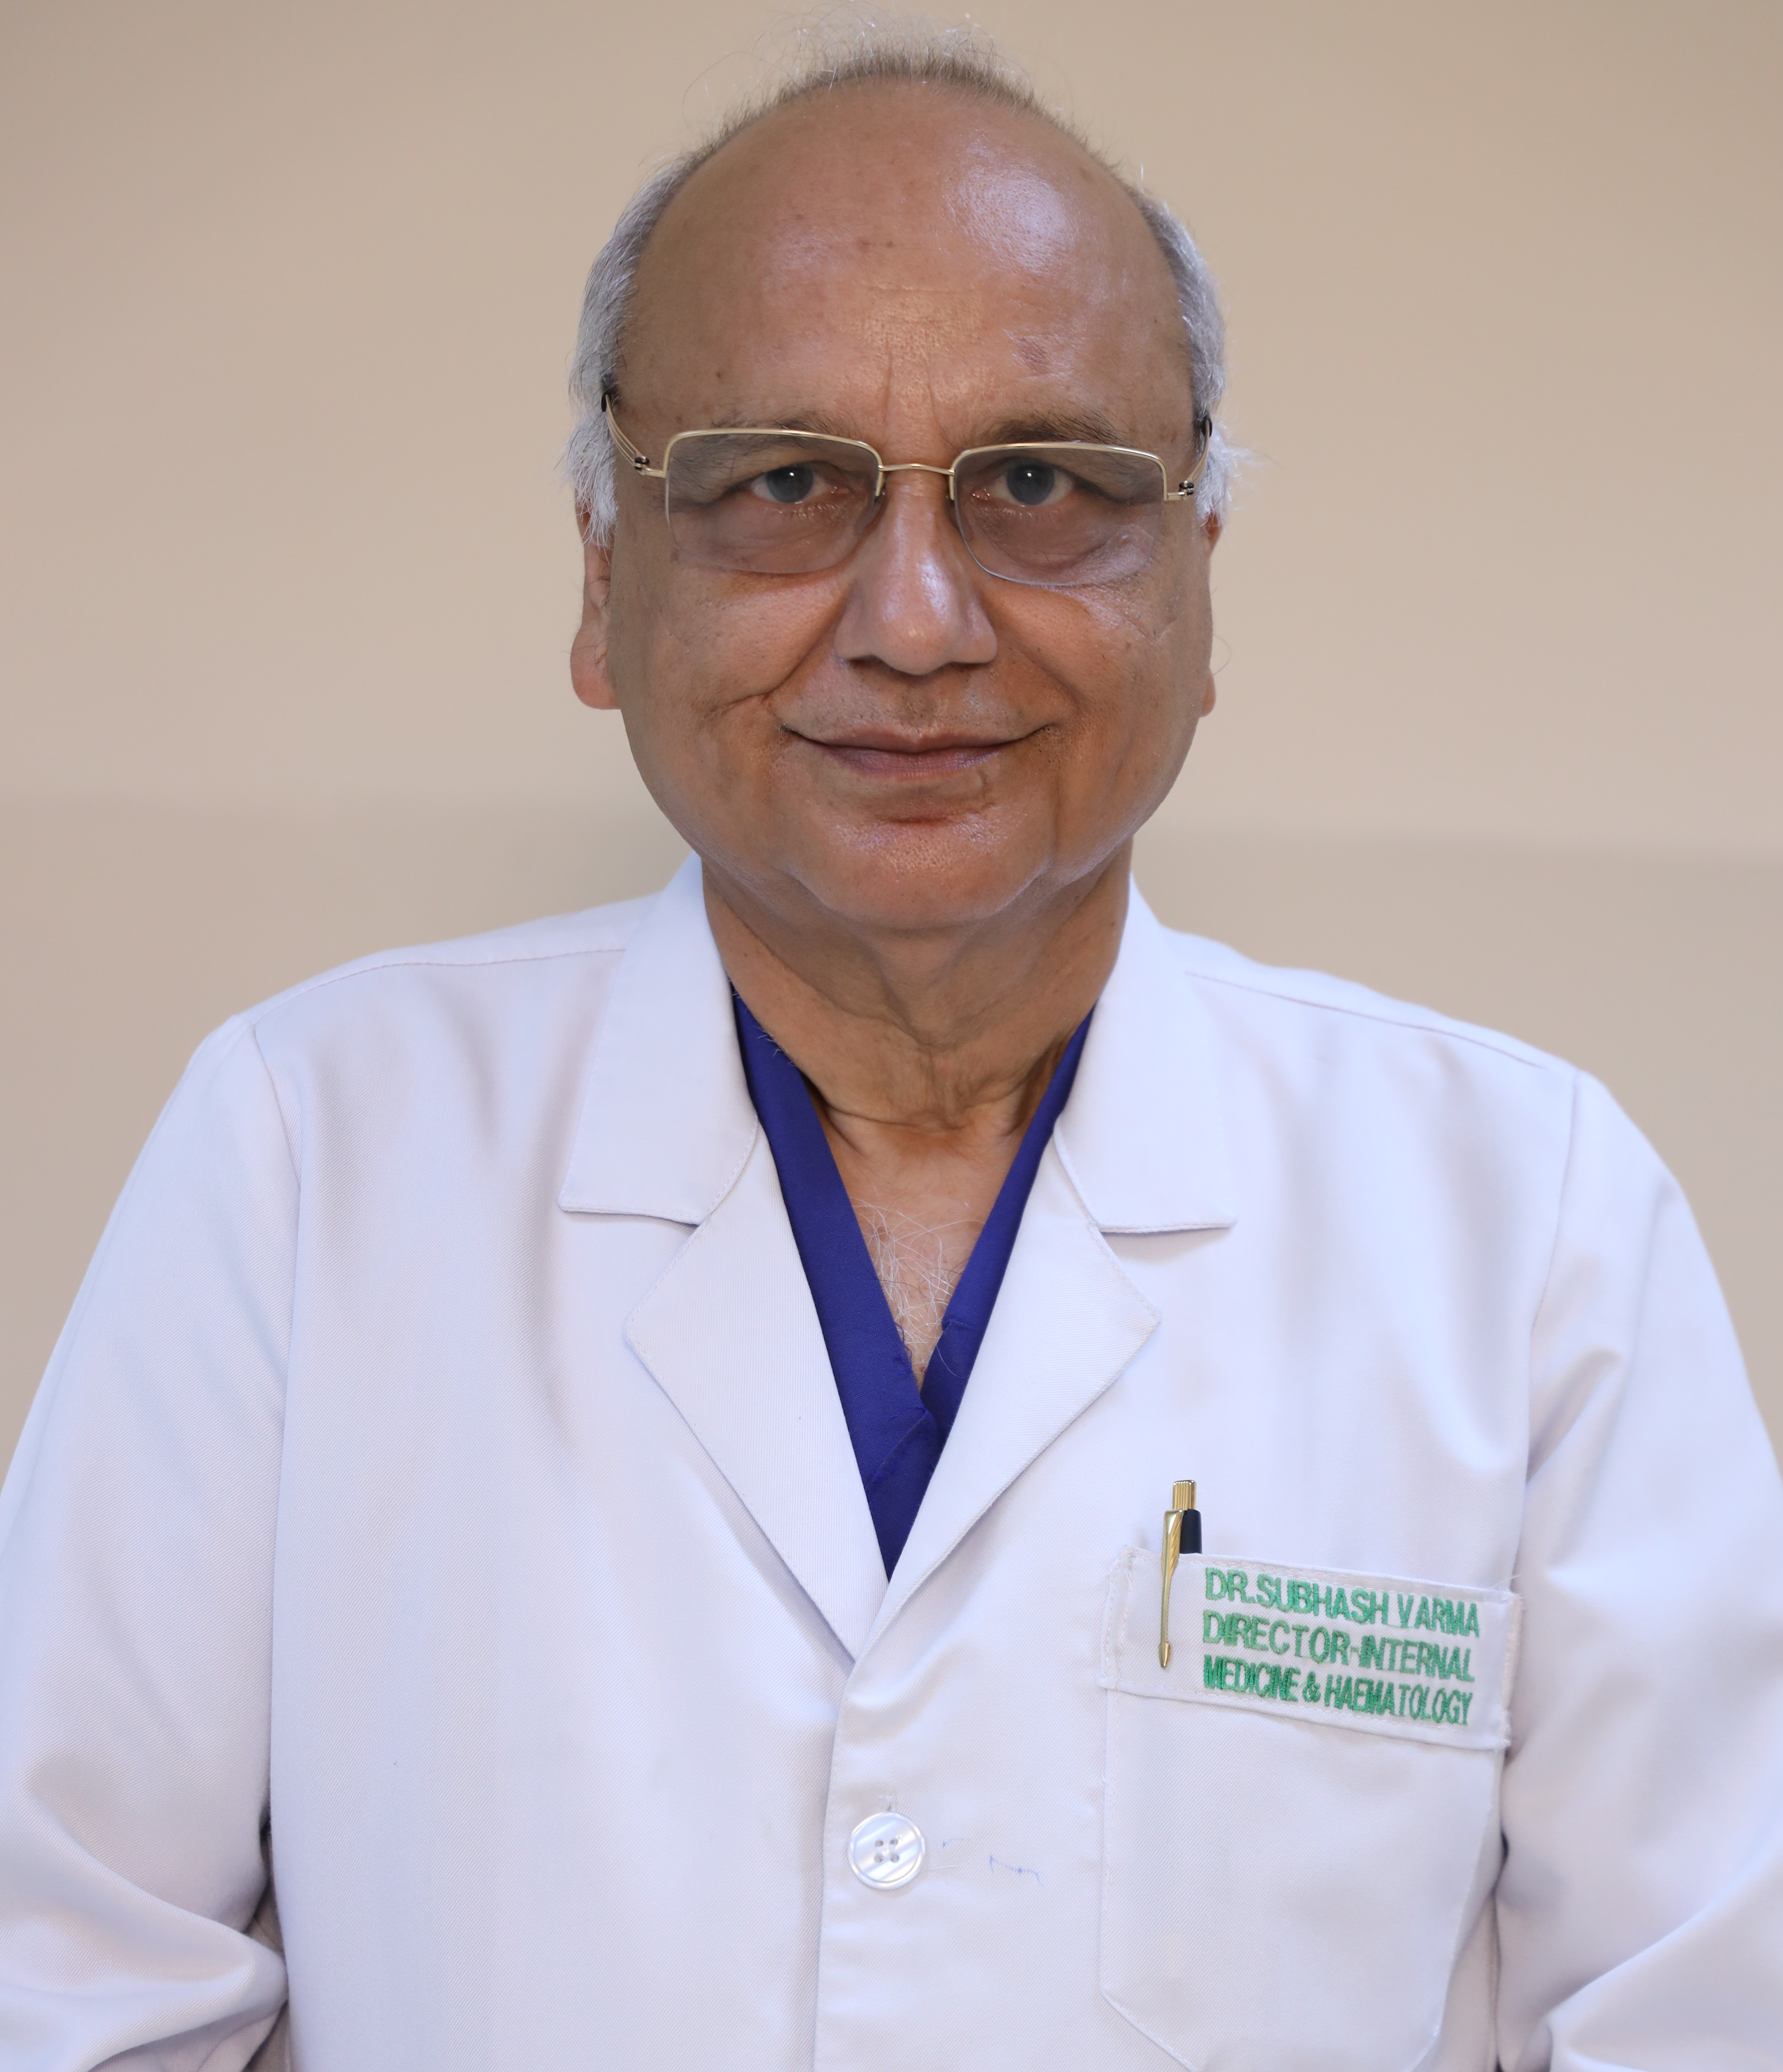 Subhash Chander Varma博士